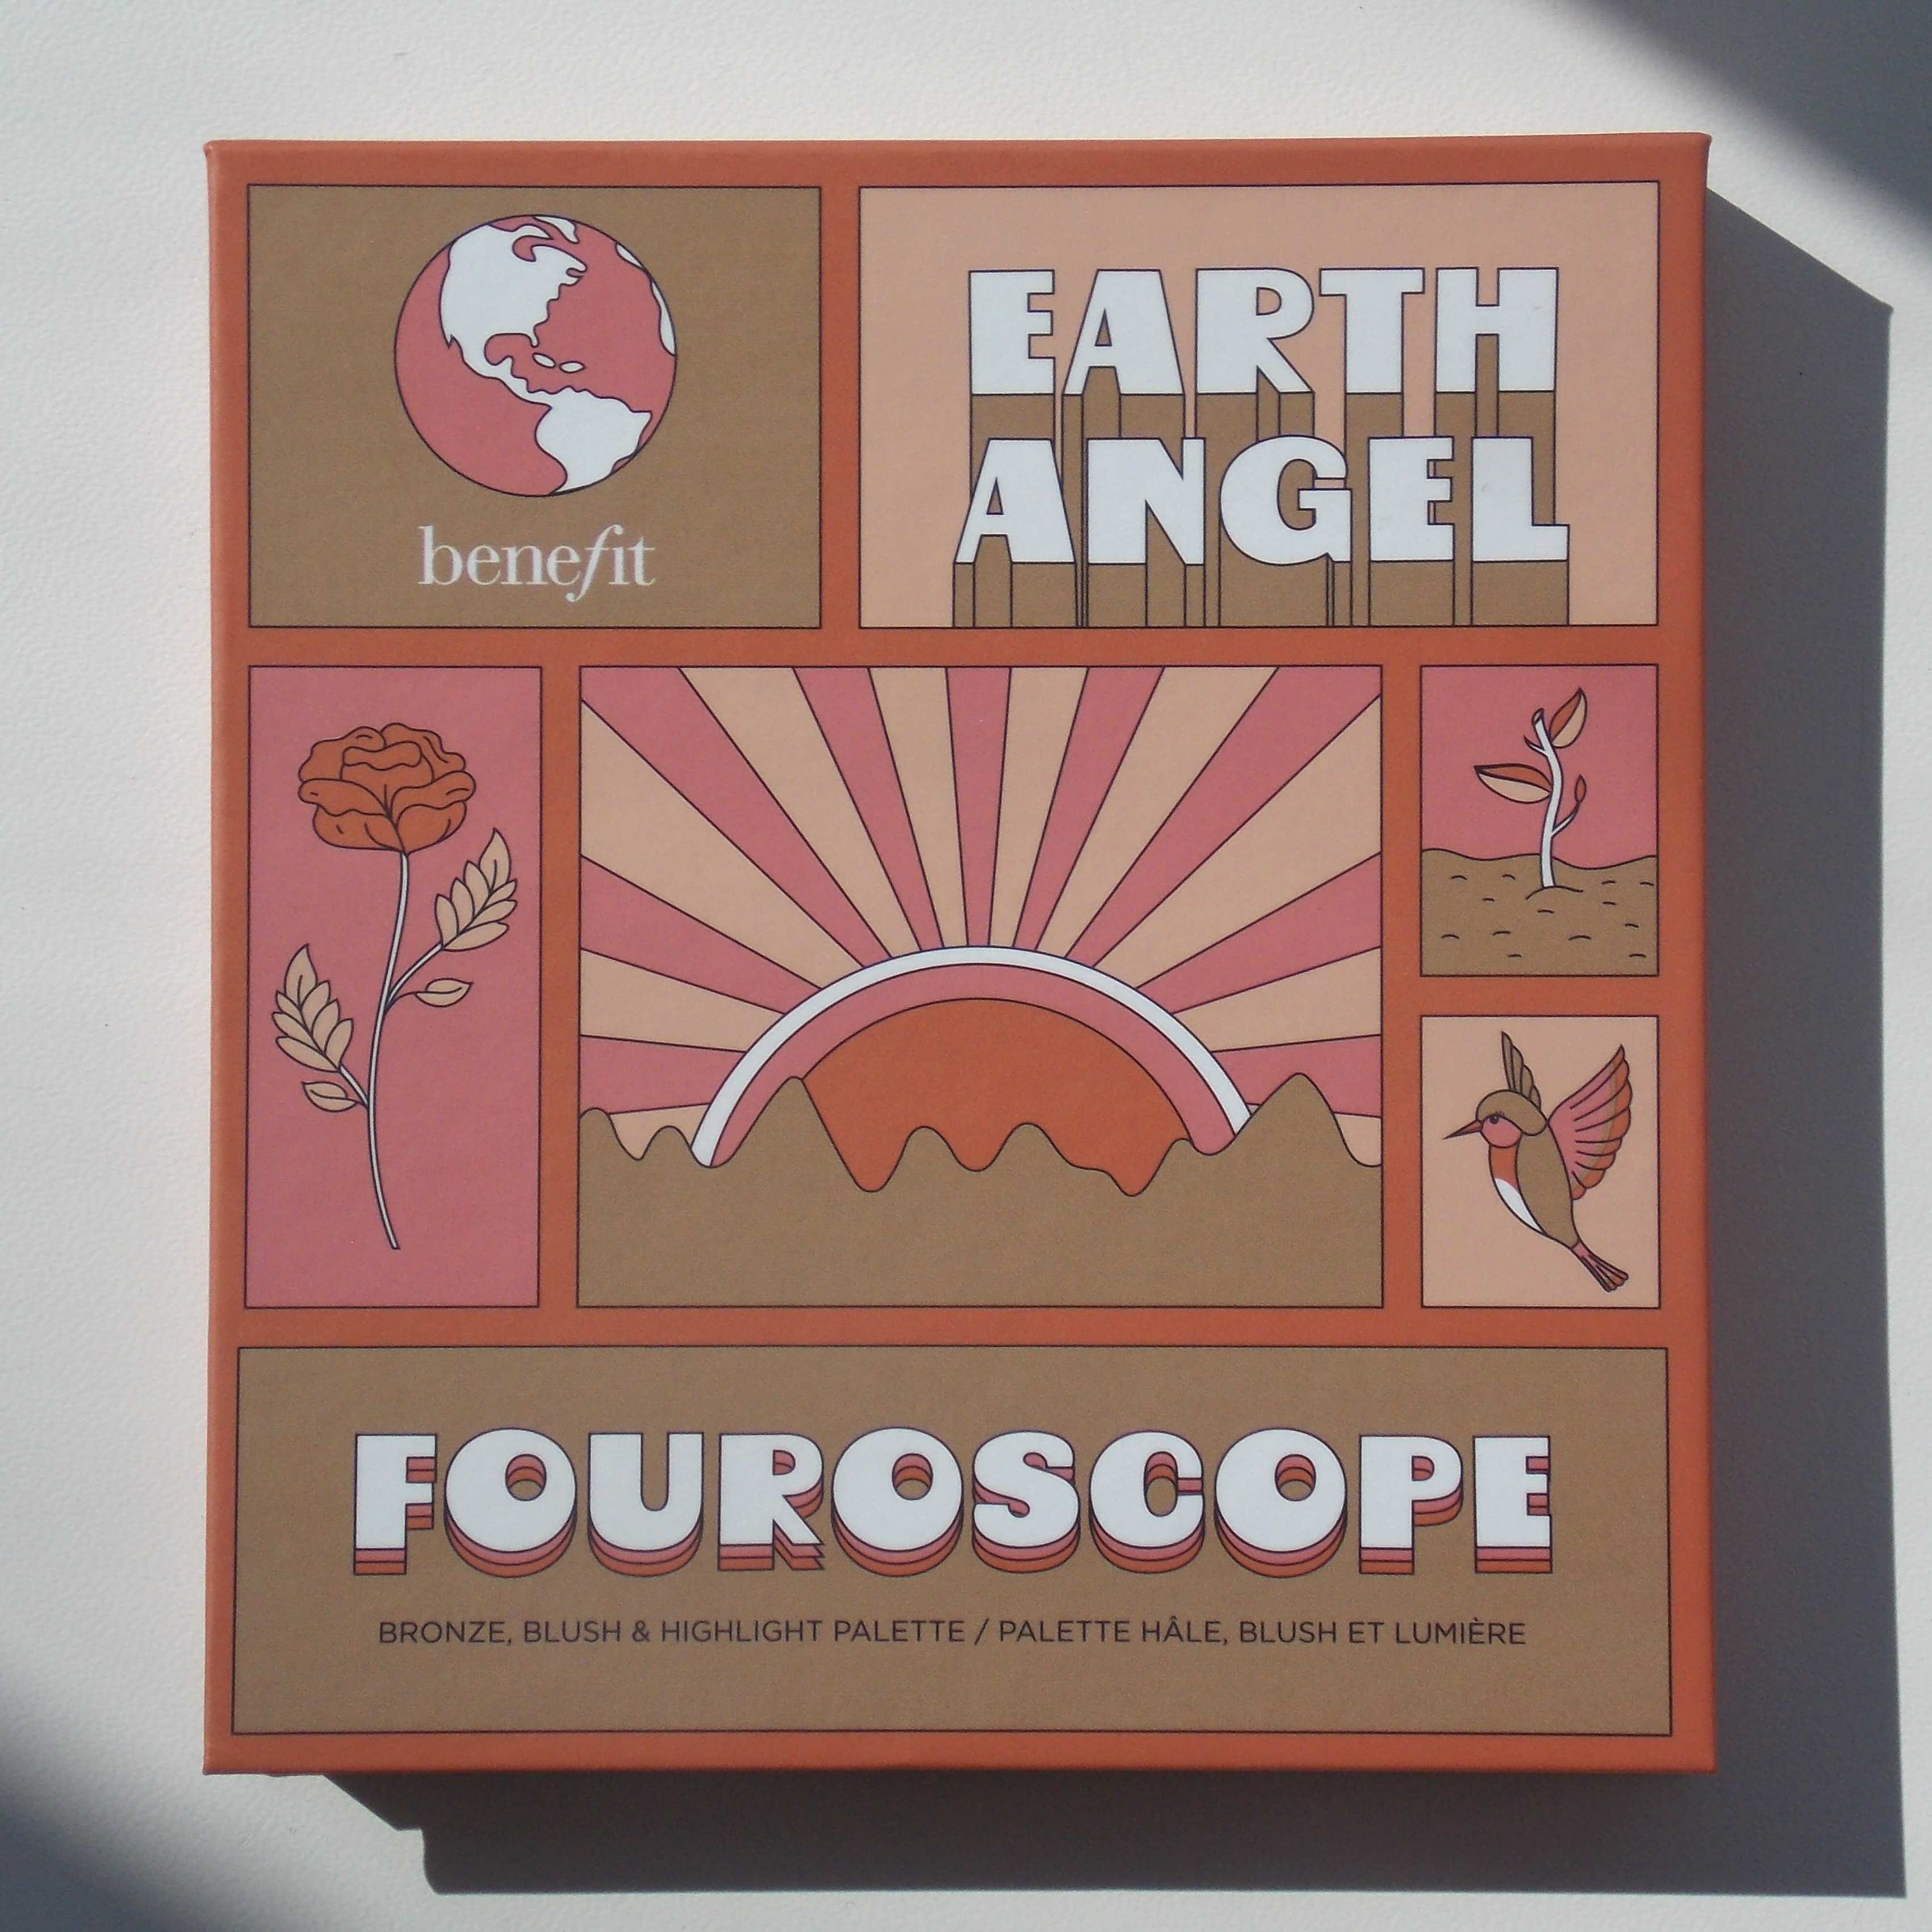 Benefit Earth Angel Fouroscope